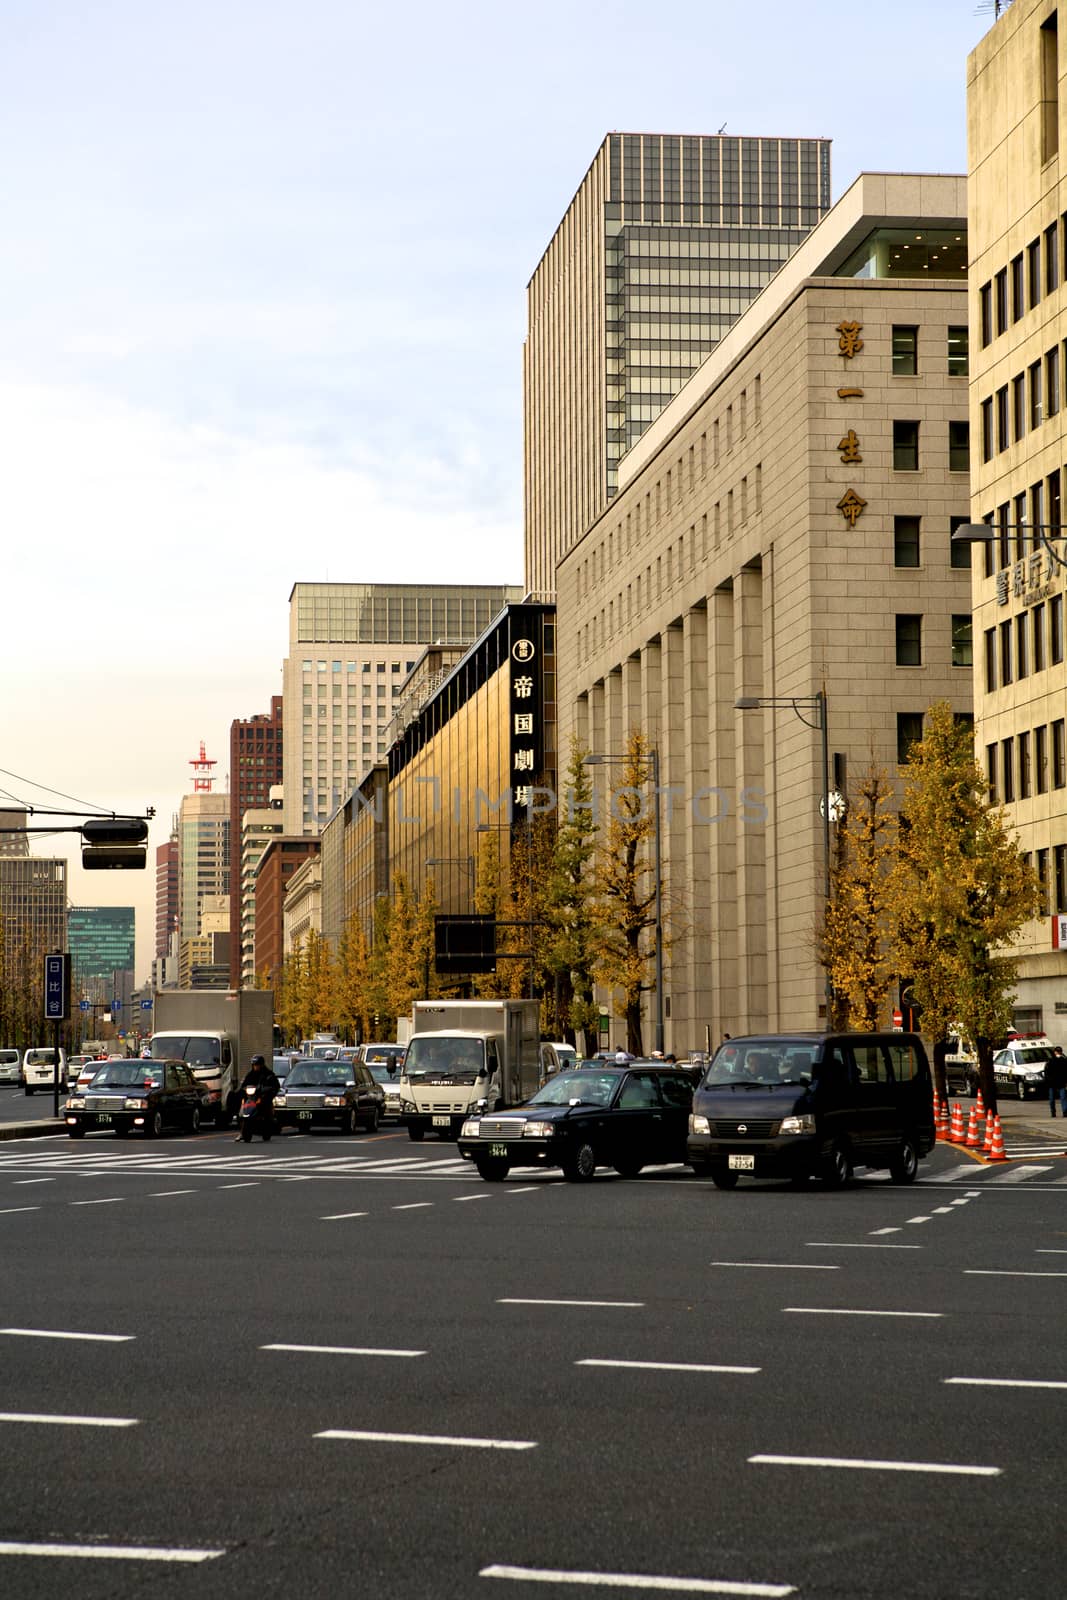 Tokyo traffic by instinia